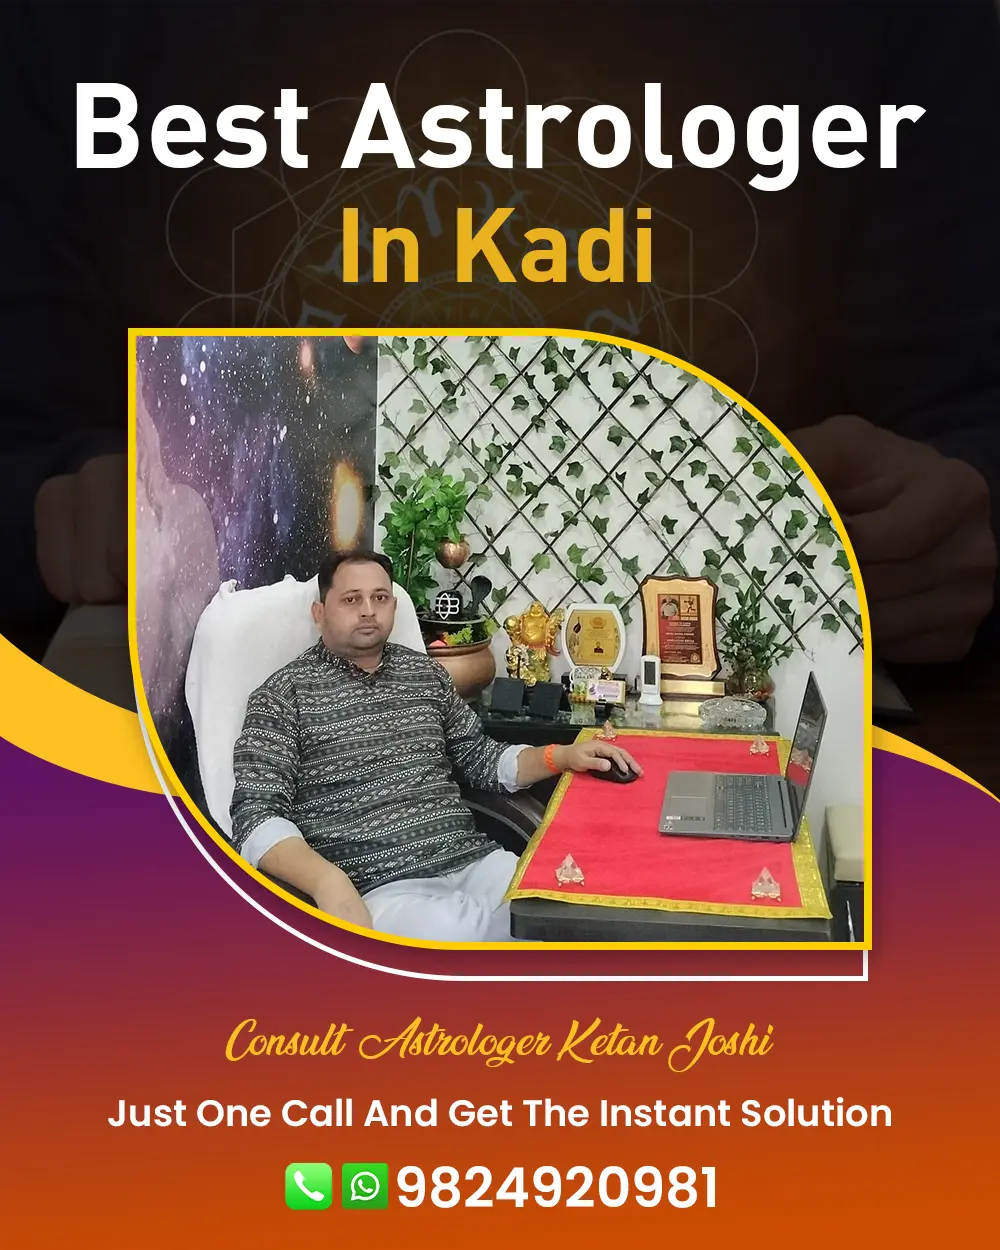 Best Astrologer In Kadi